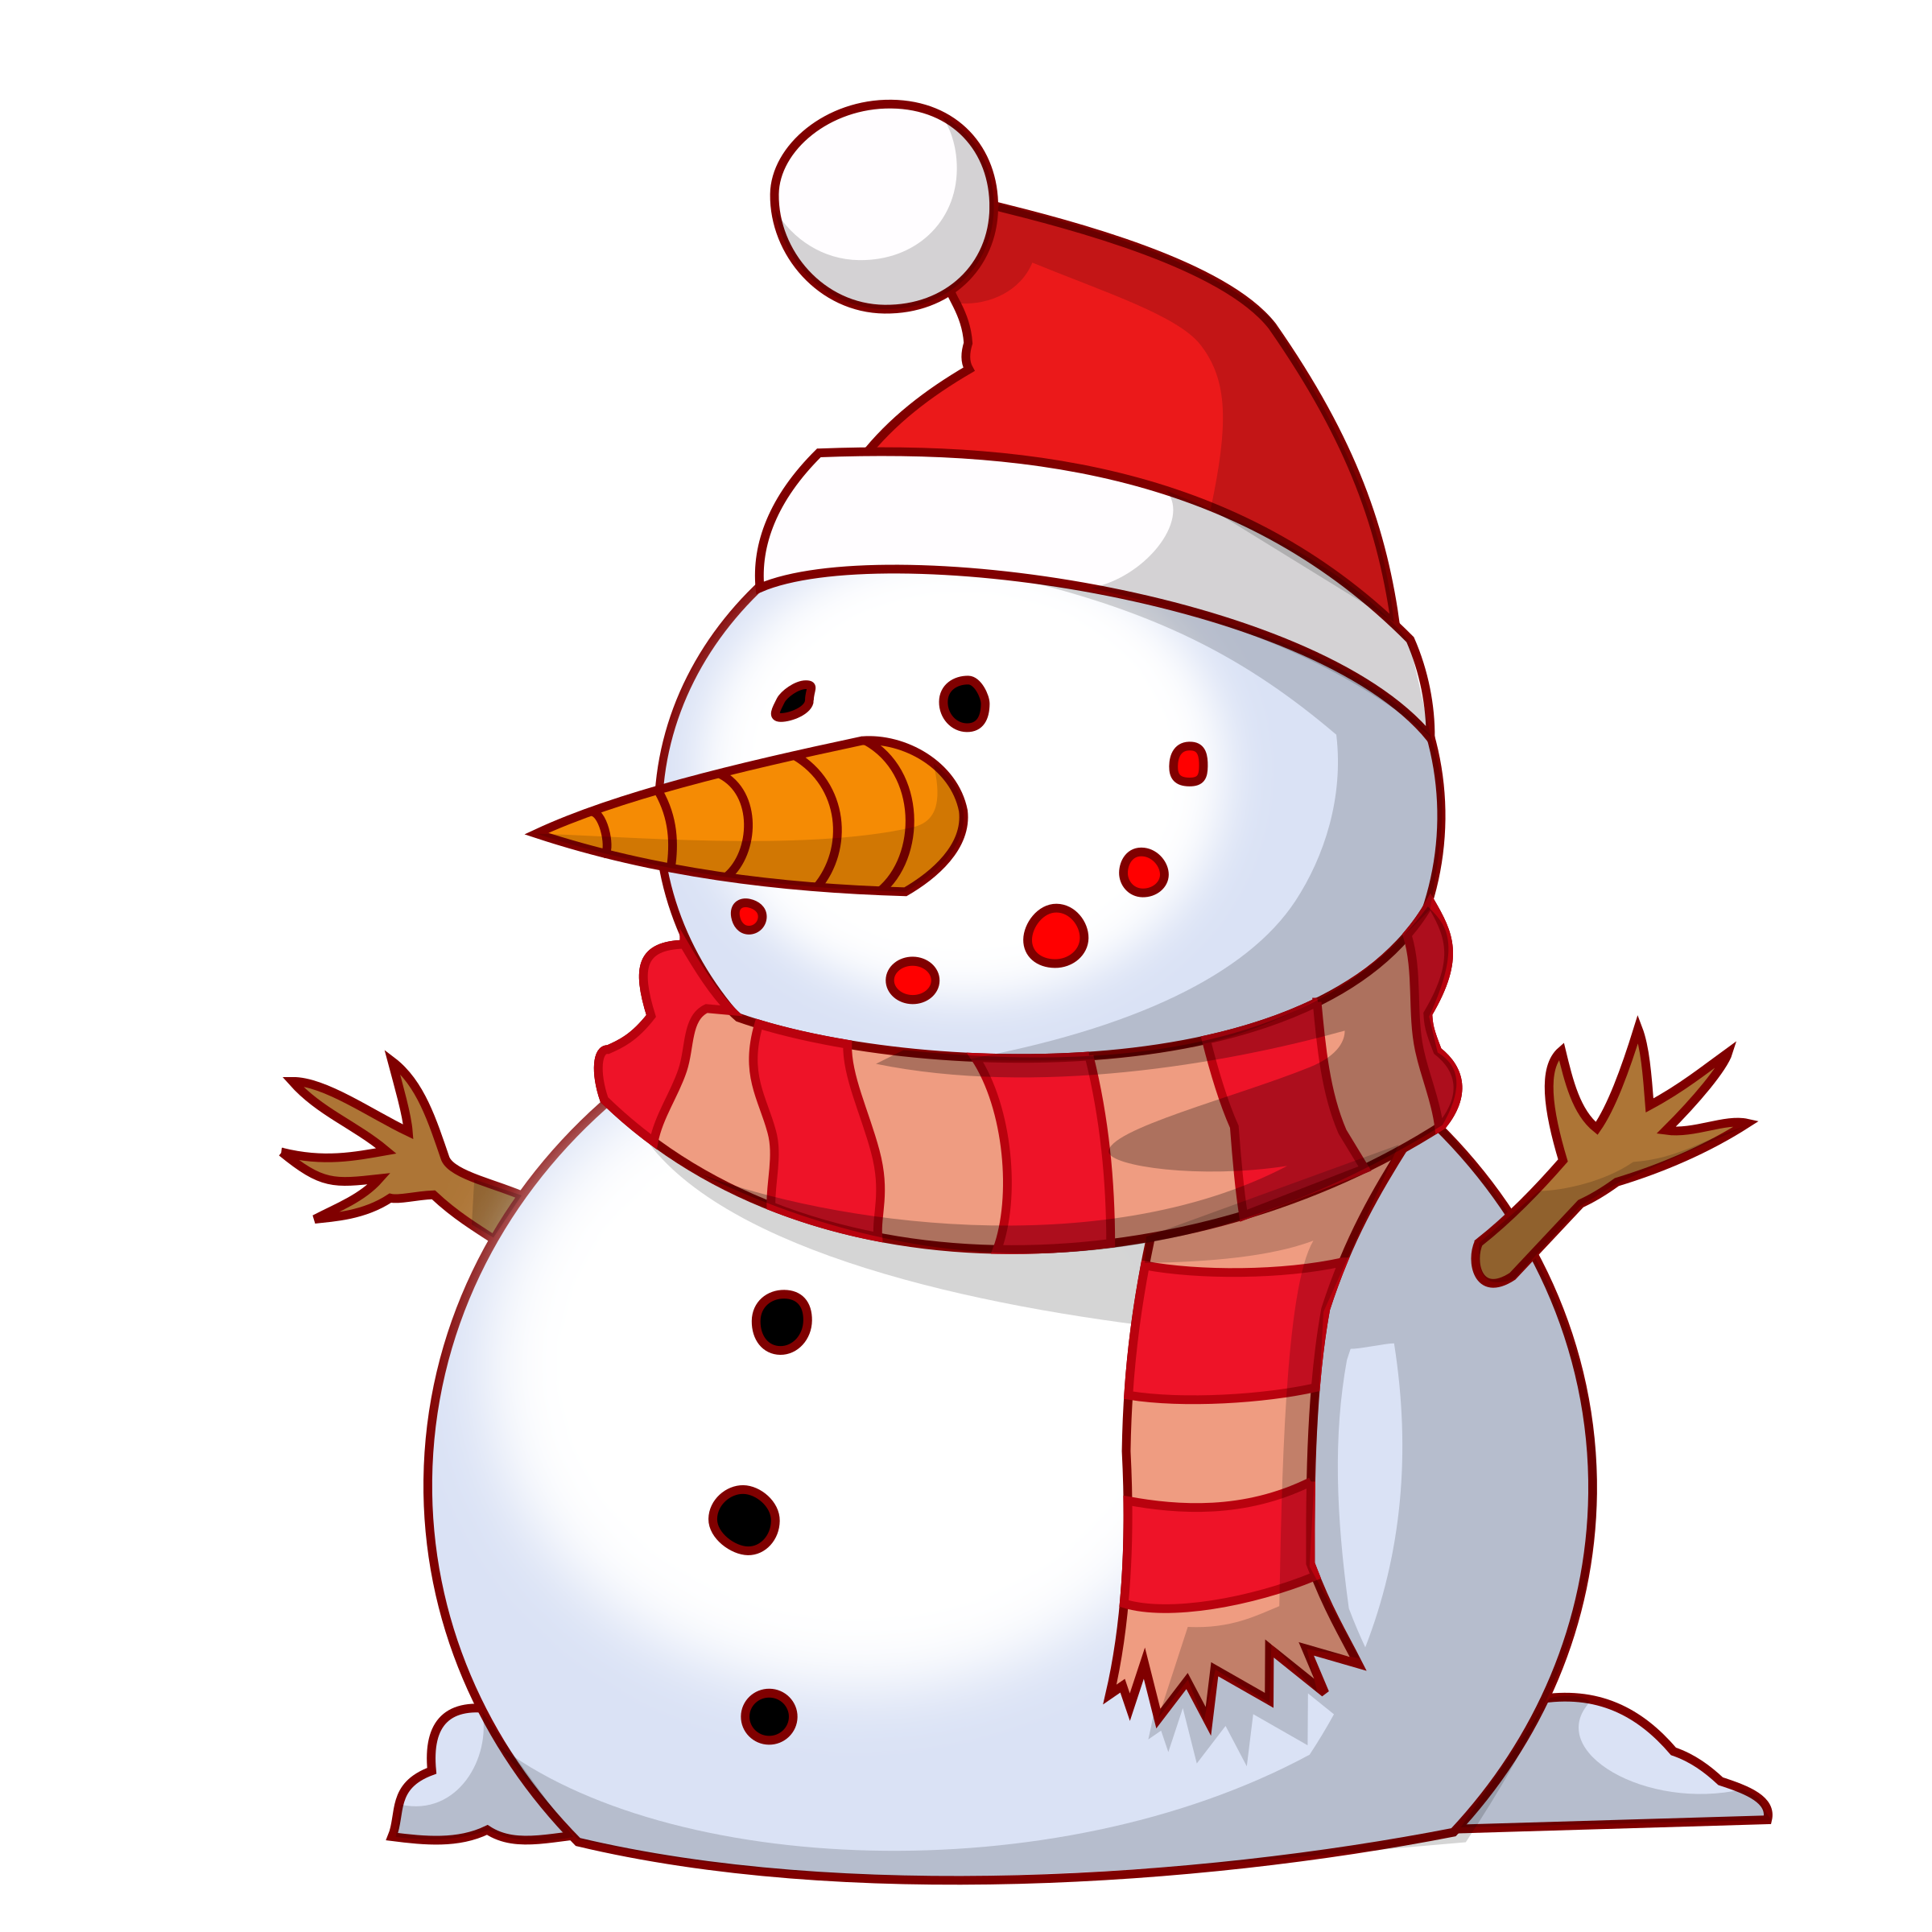 Happy Snowman Vector Clipart image Free stock photo Public Domain photo CC0 Images